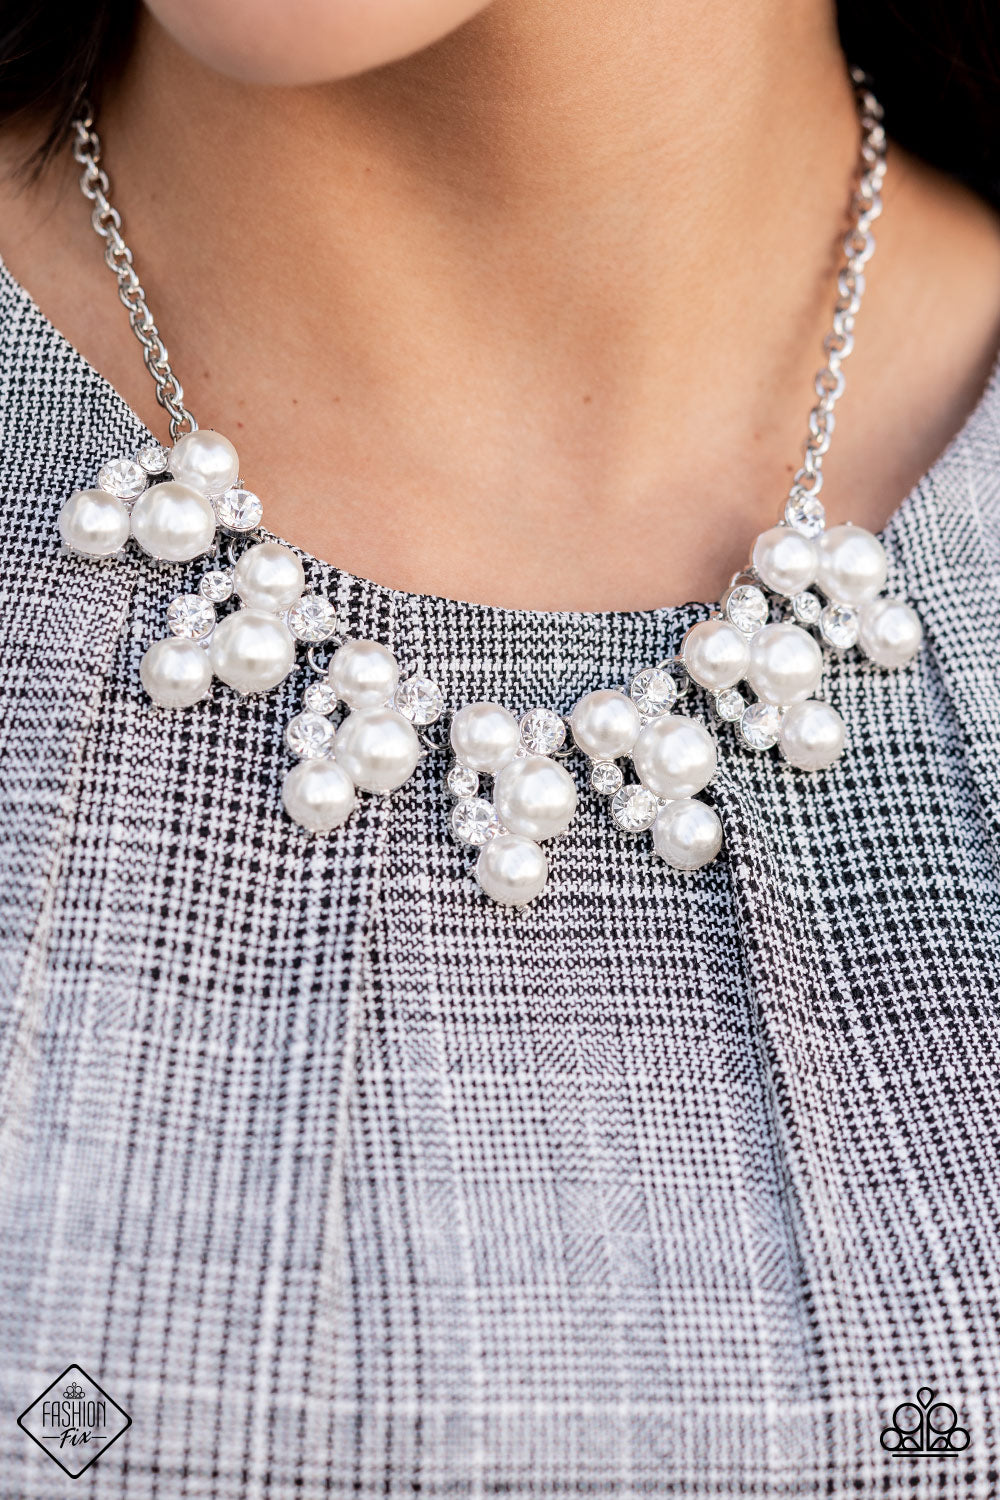 Fiercely 5th Avenue - Complete Trend Blend Oct 2021 White Fashion Fix Exclusive Set - Princess Glam Shop